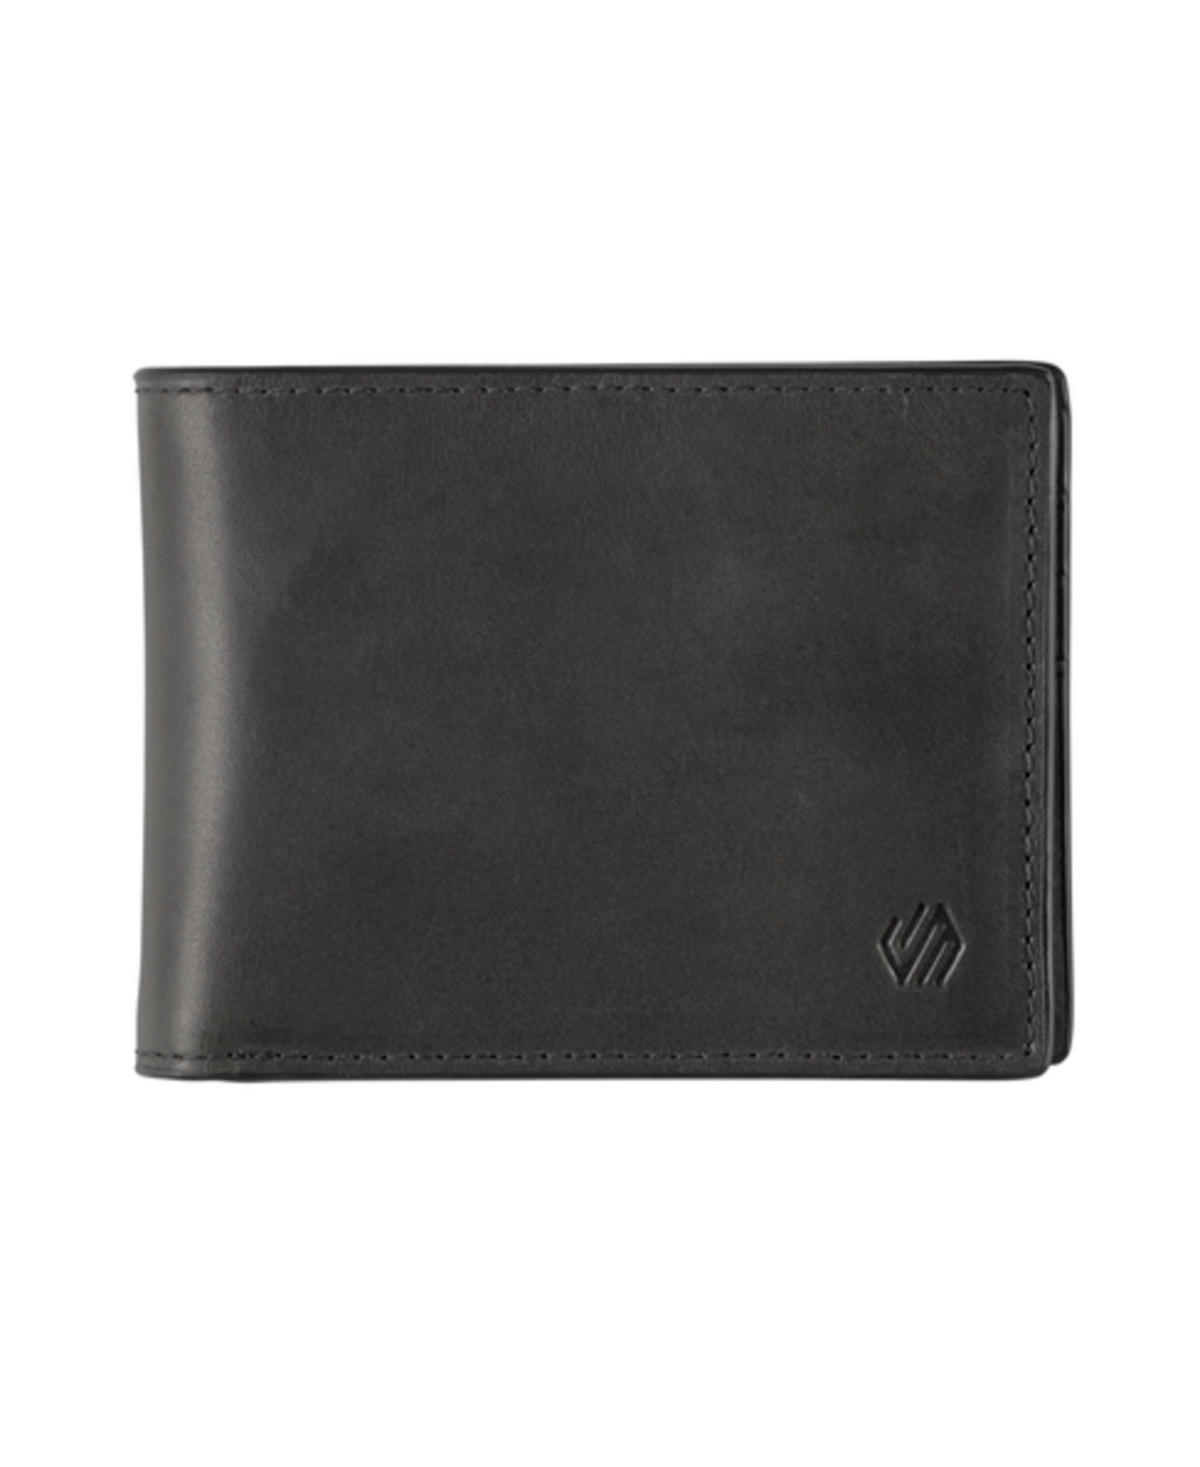 Men's Rhodes 2-in-1 Billfold Wallet - Black Full Grain Leather